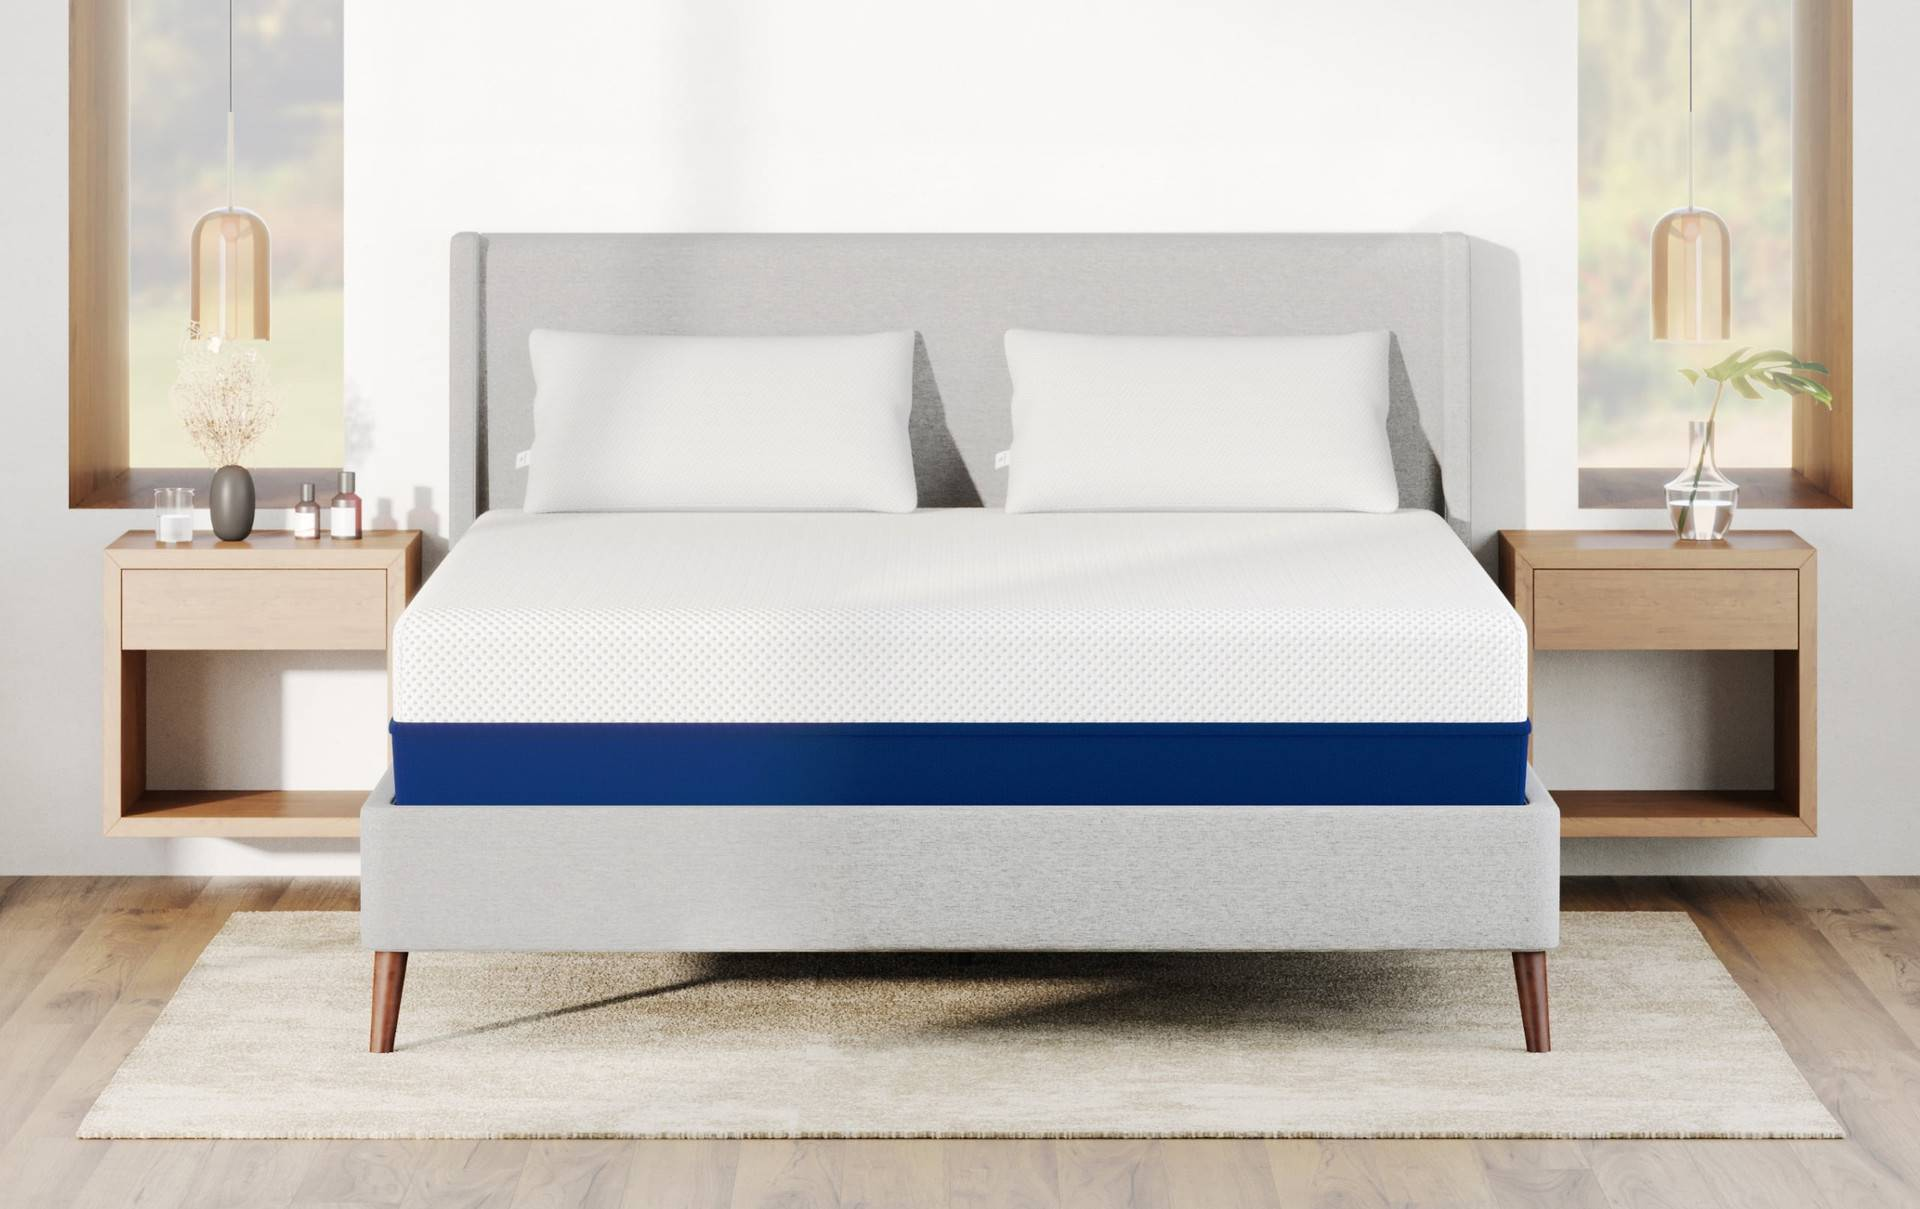 brooklyn bedding signature hybrid latex mattress Best Mattress For Adjustable Beds, adjustable frame, adjustable beds purple mattress, avocado green mattress